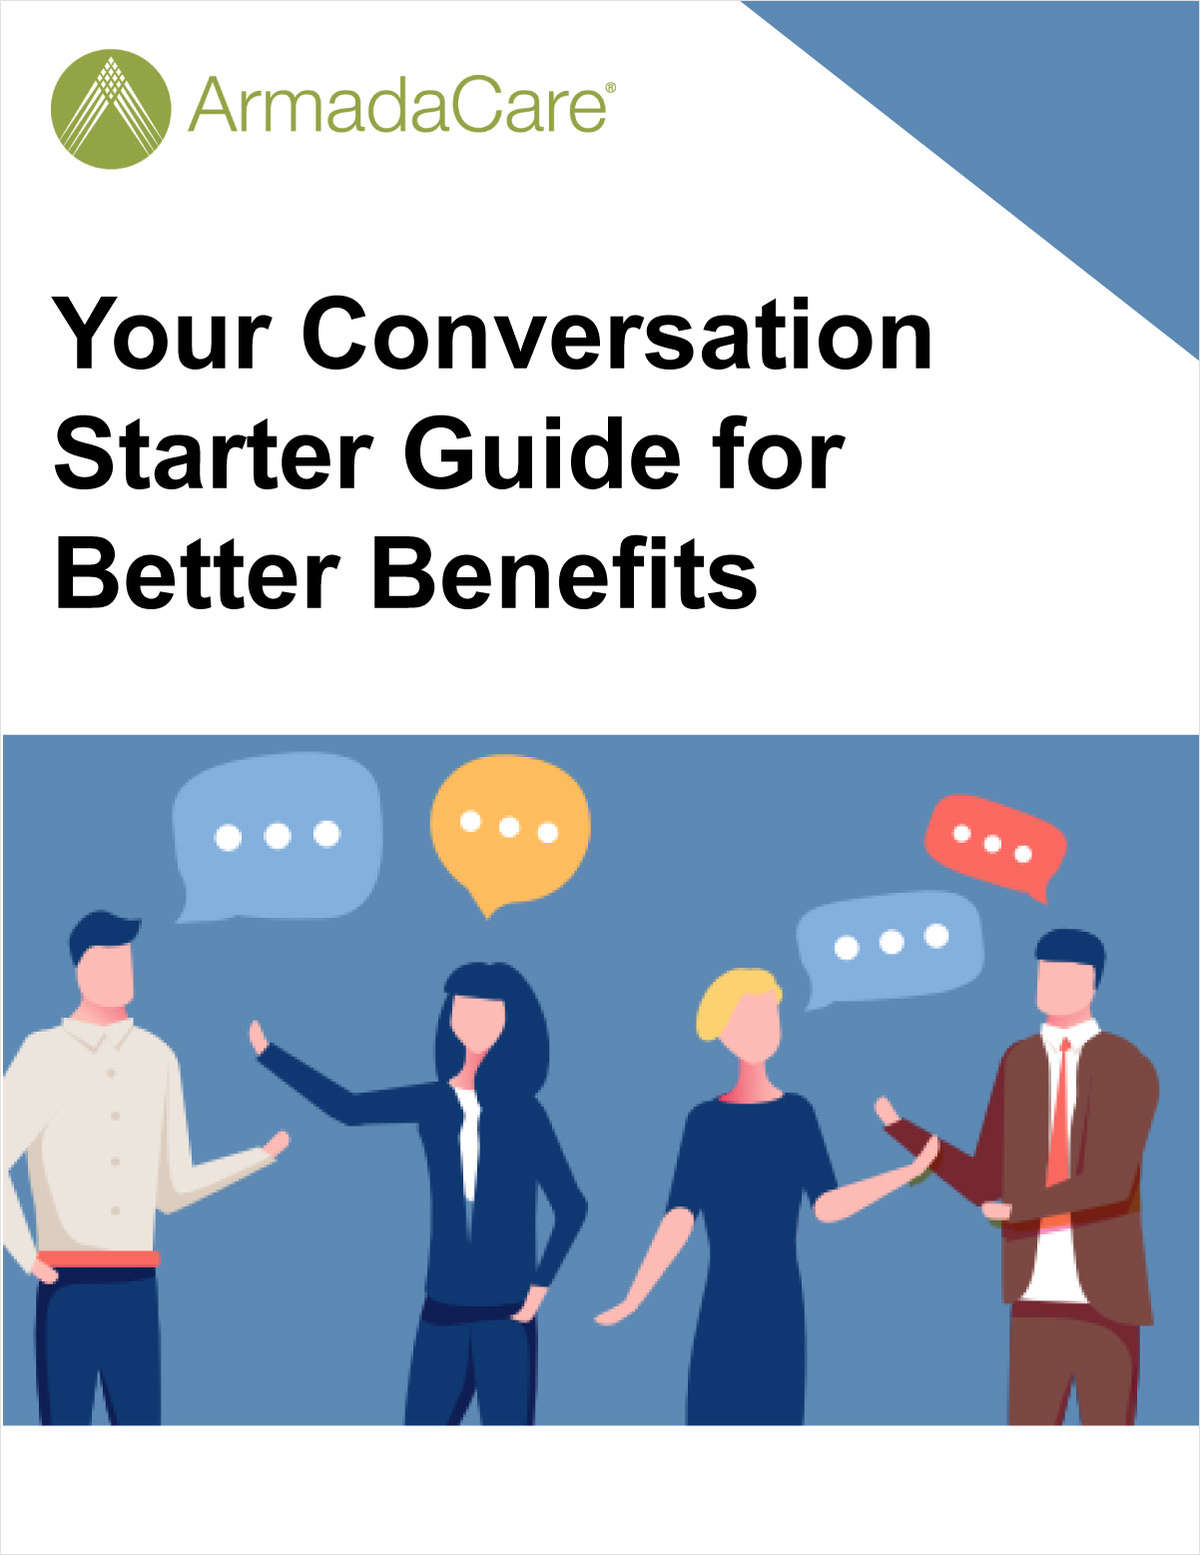 Top 6 Conversation Starters for Better Benefits